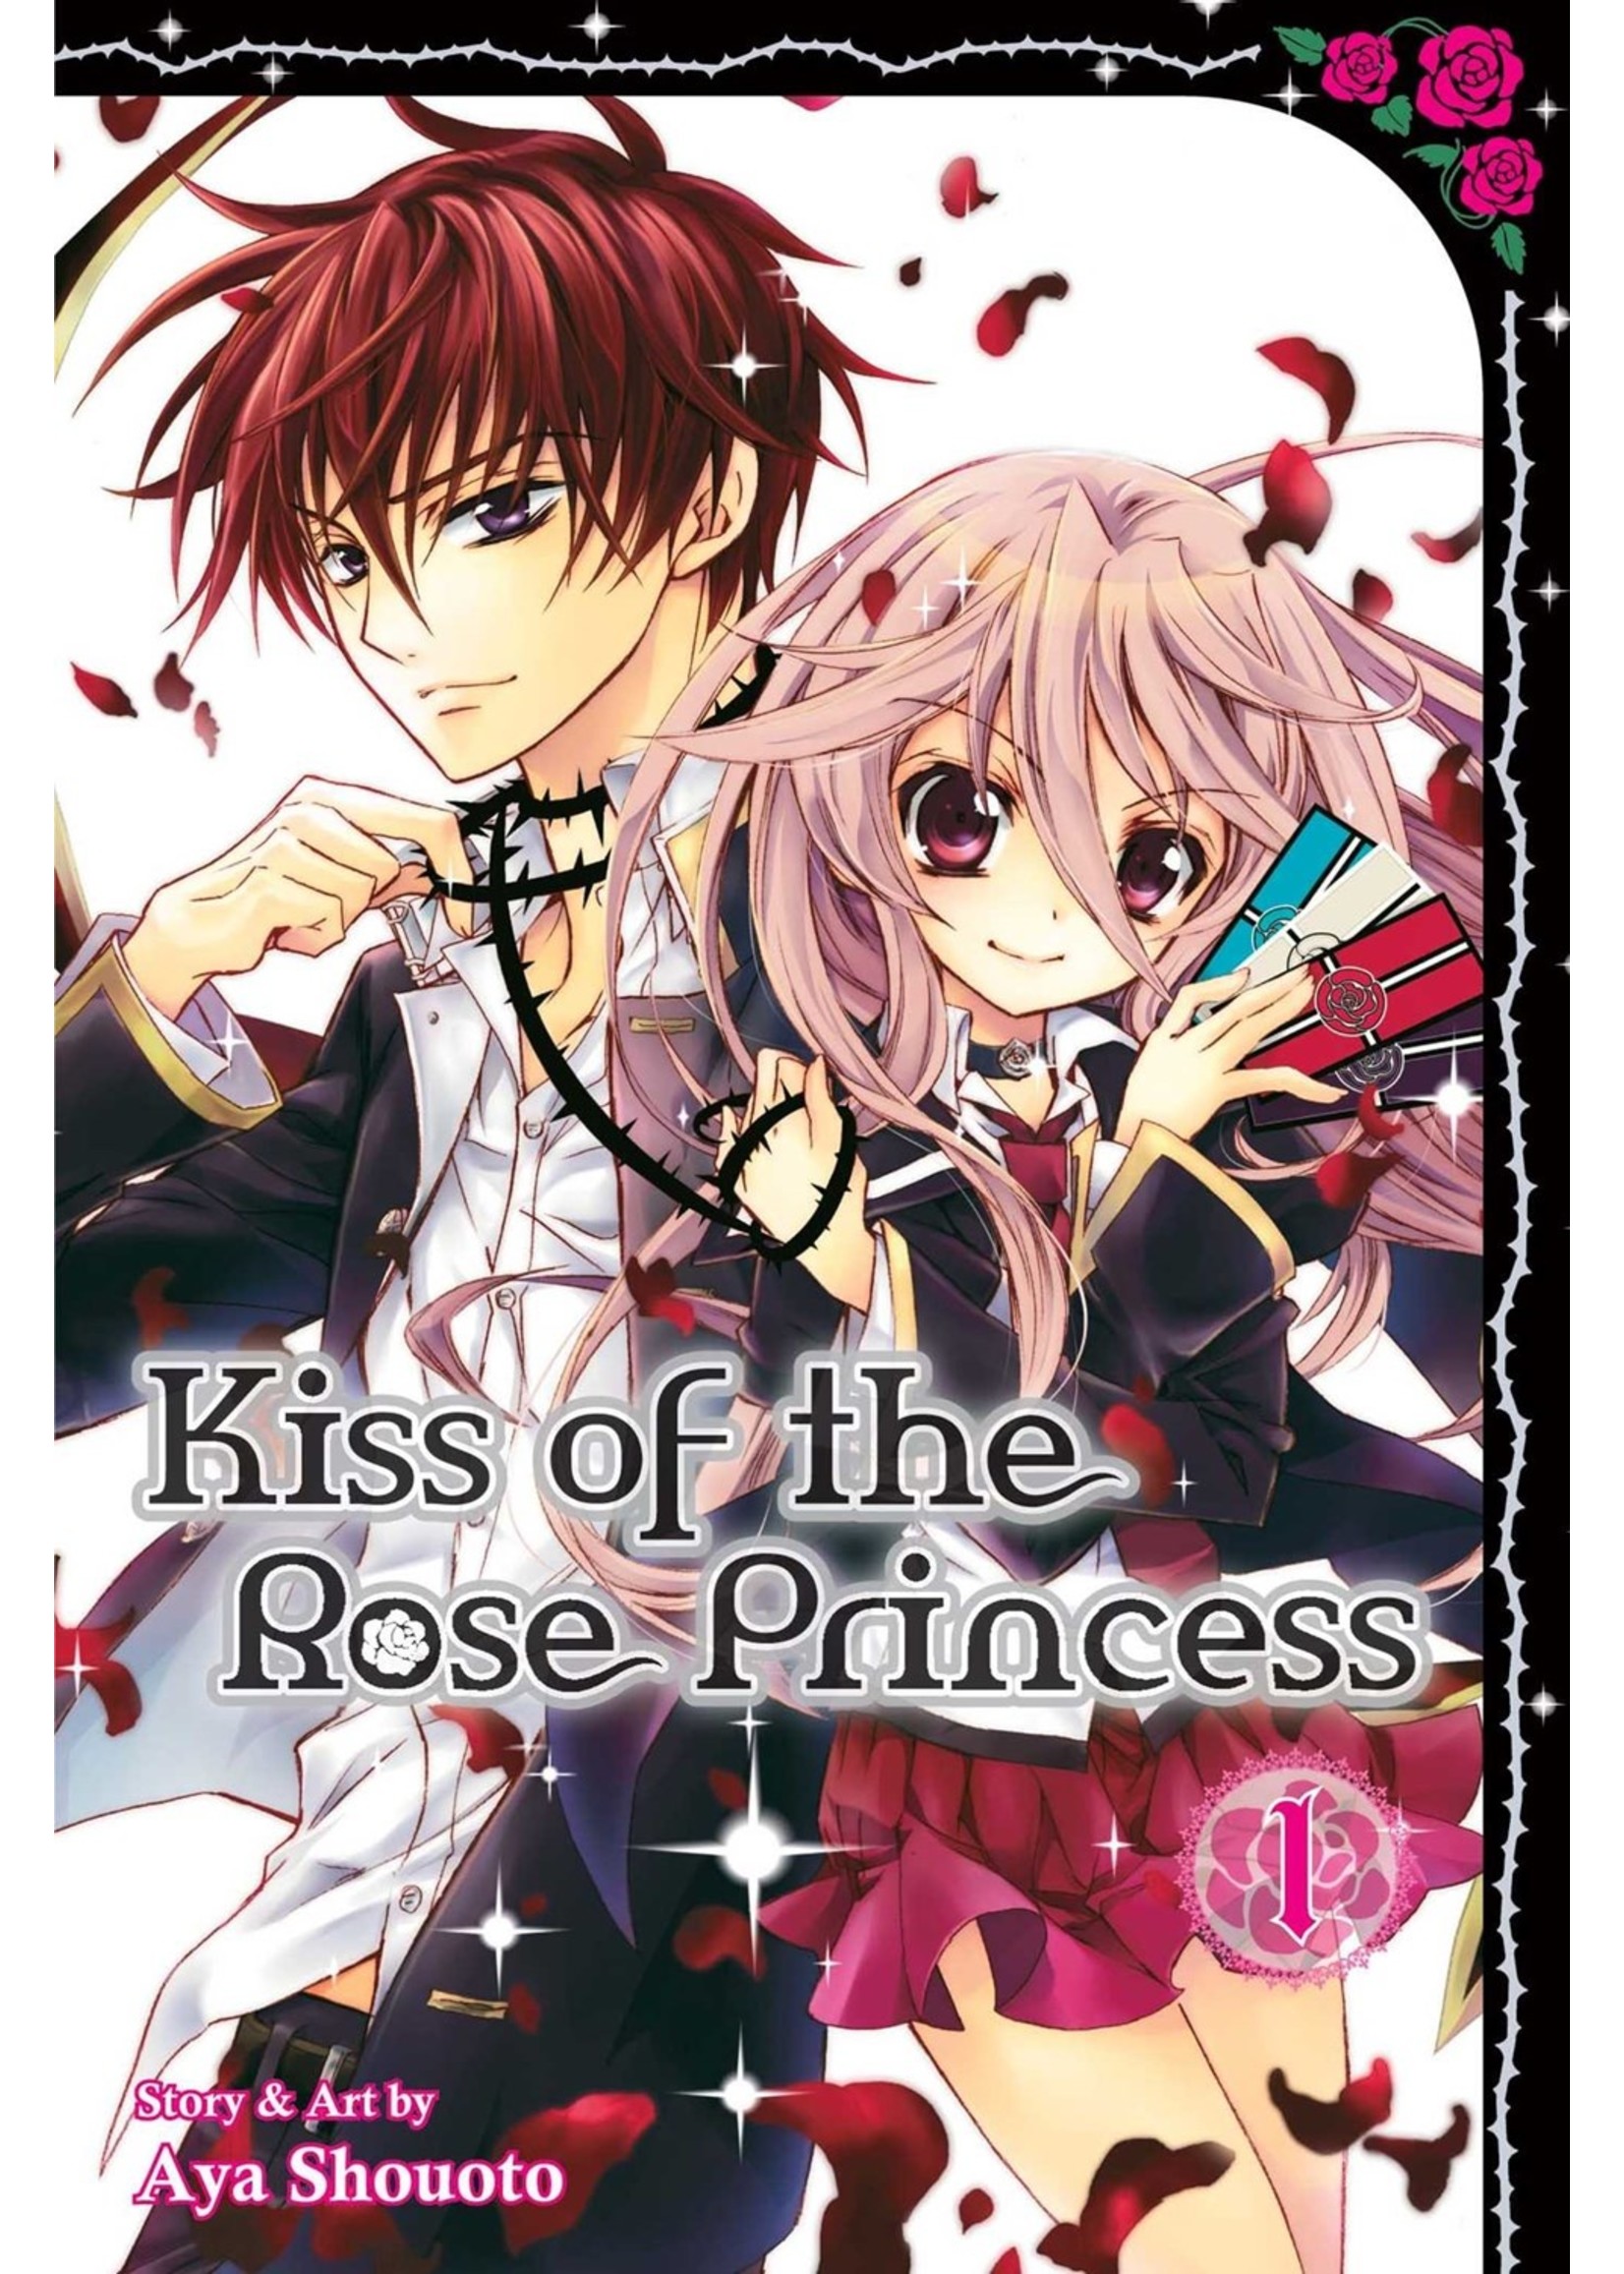 Manga KISS ROSE PRINCESS V1